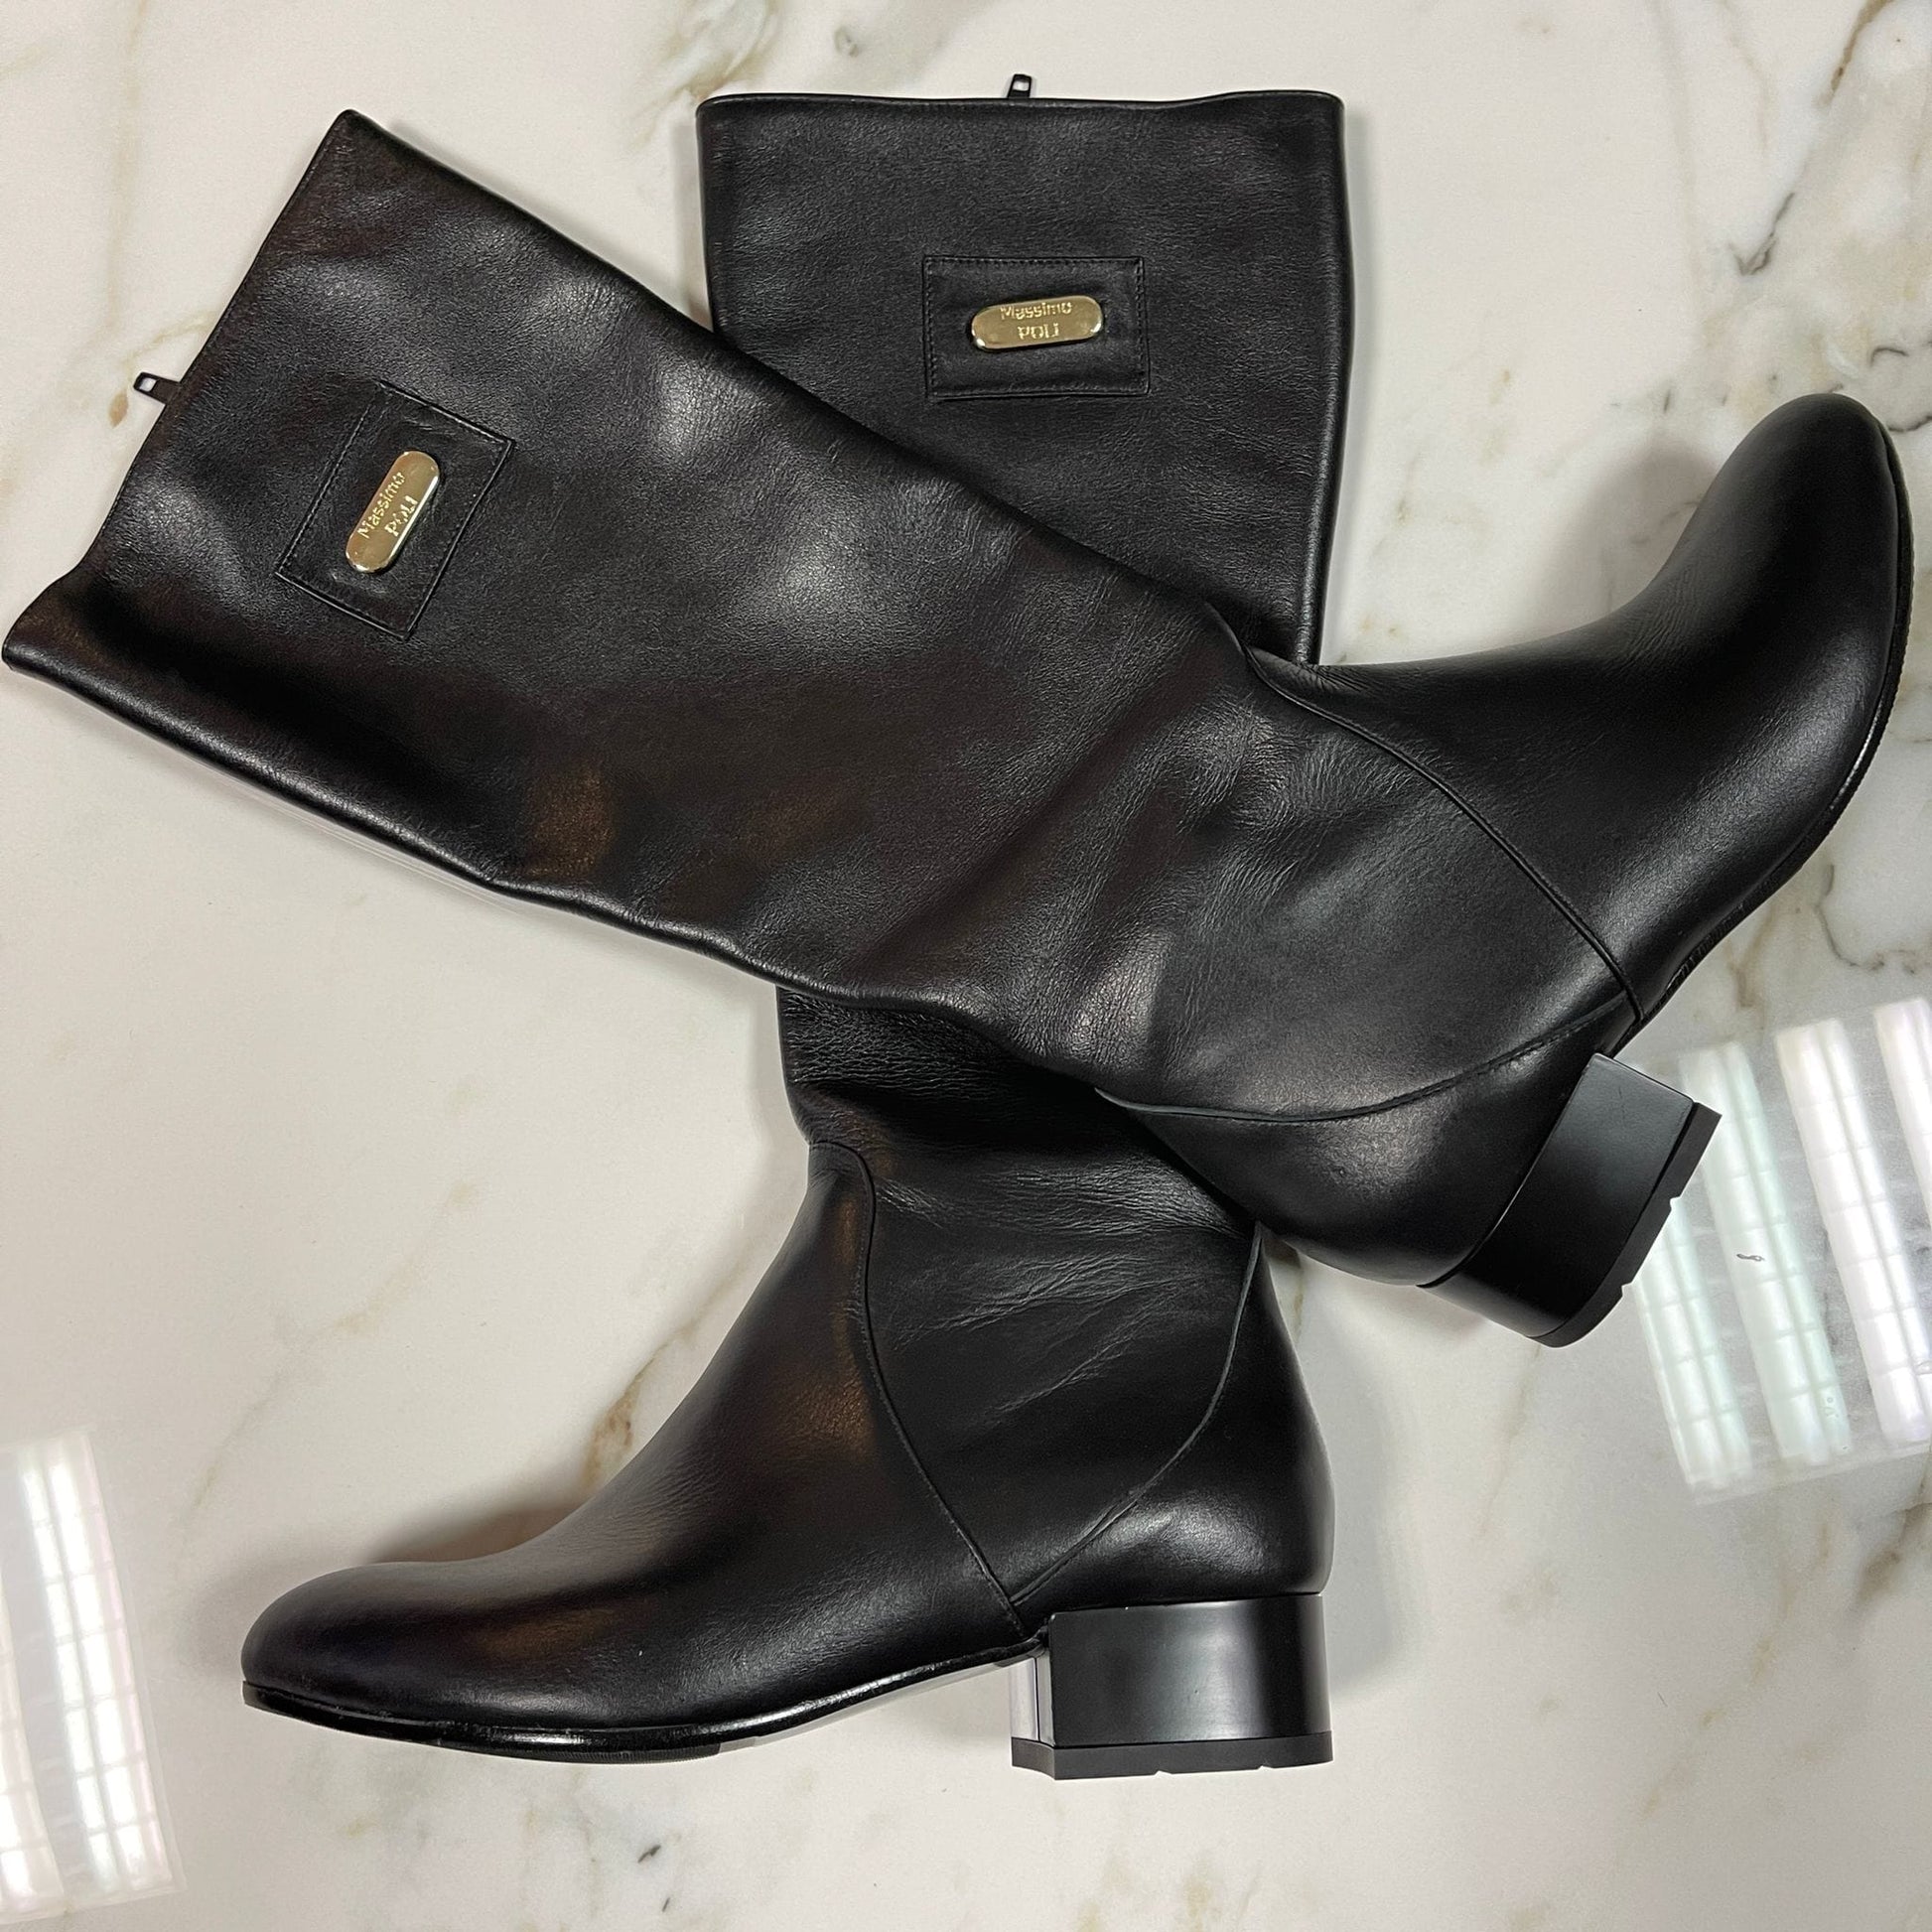 Petite size kitten heel knee high boots in black leather